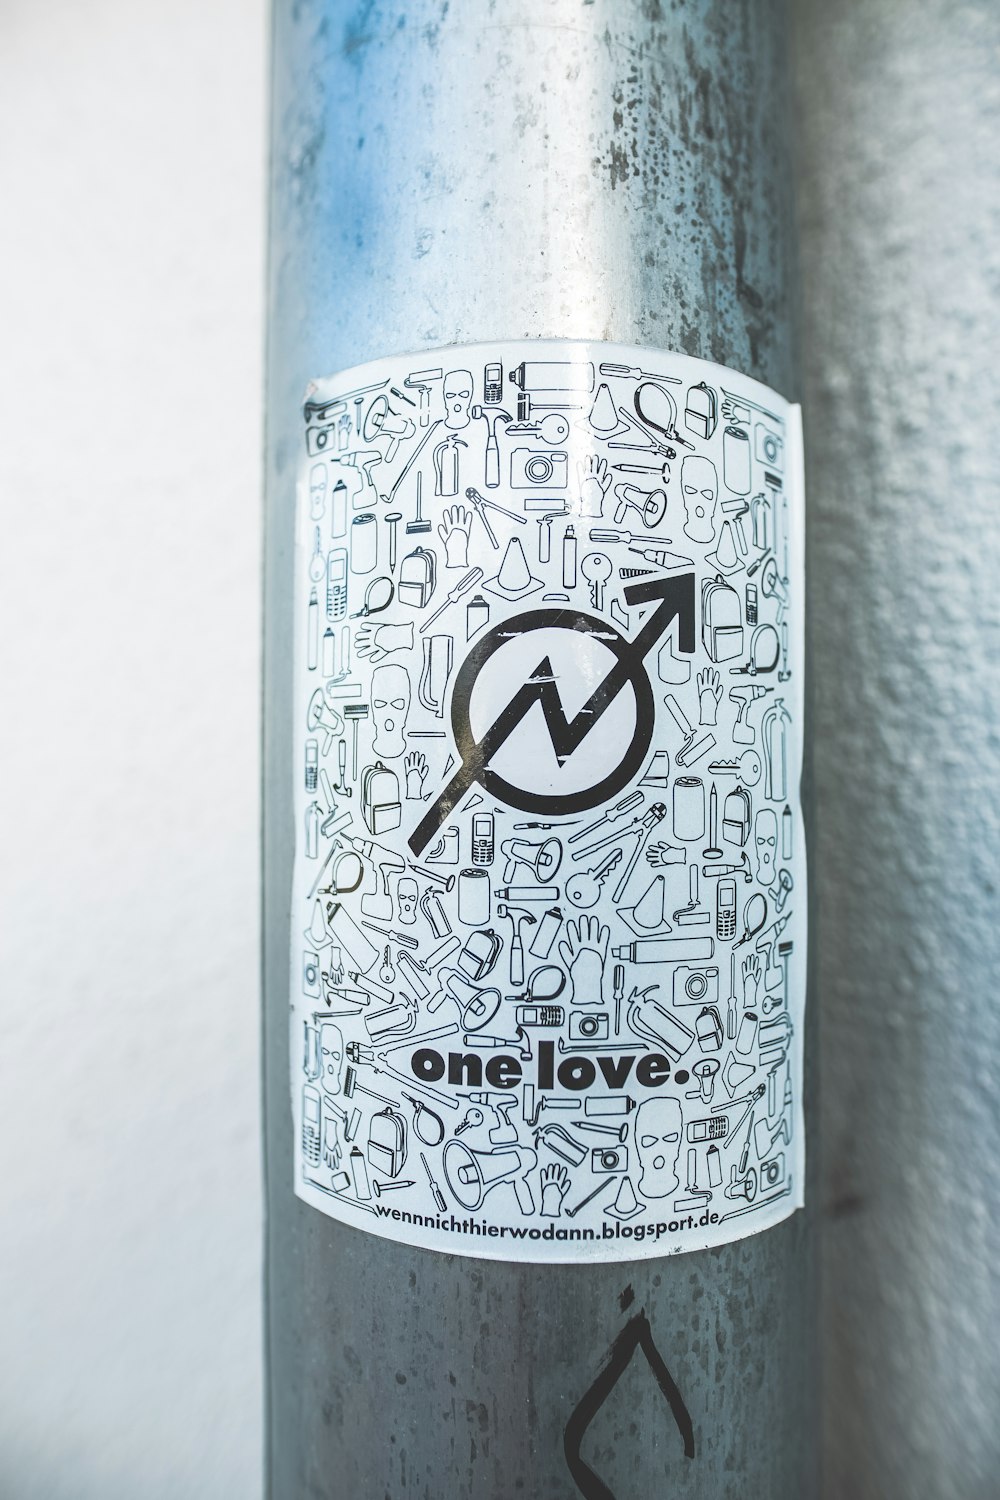 One Love signage